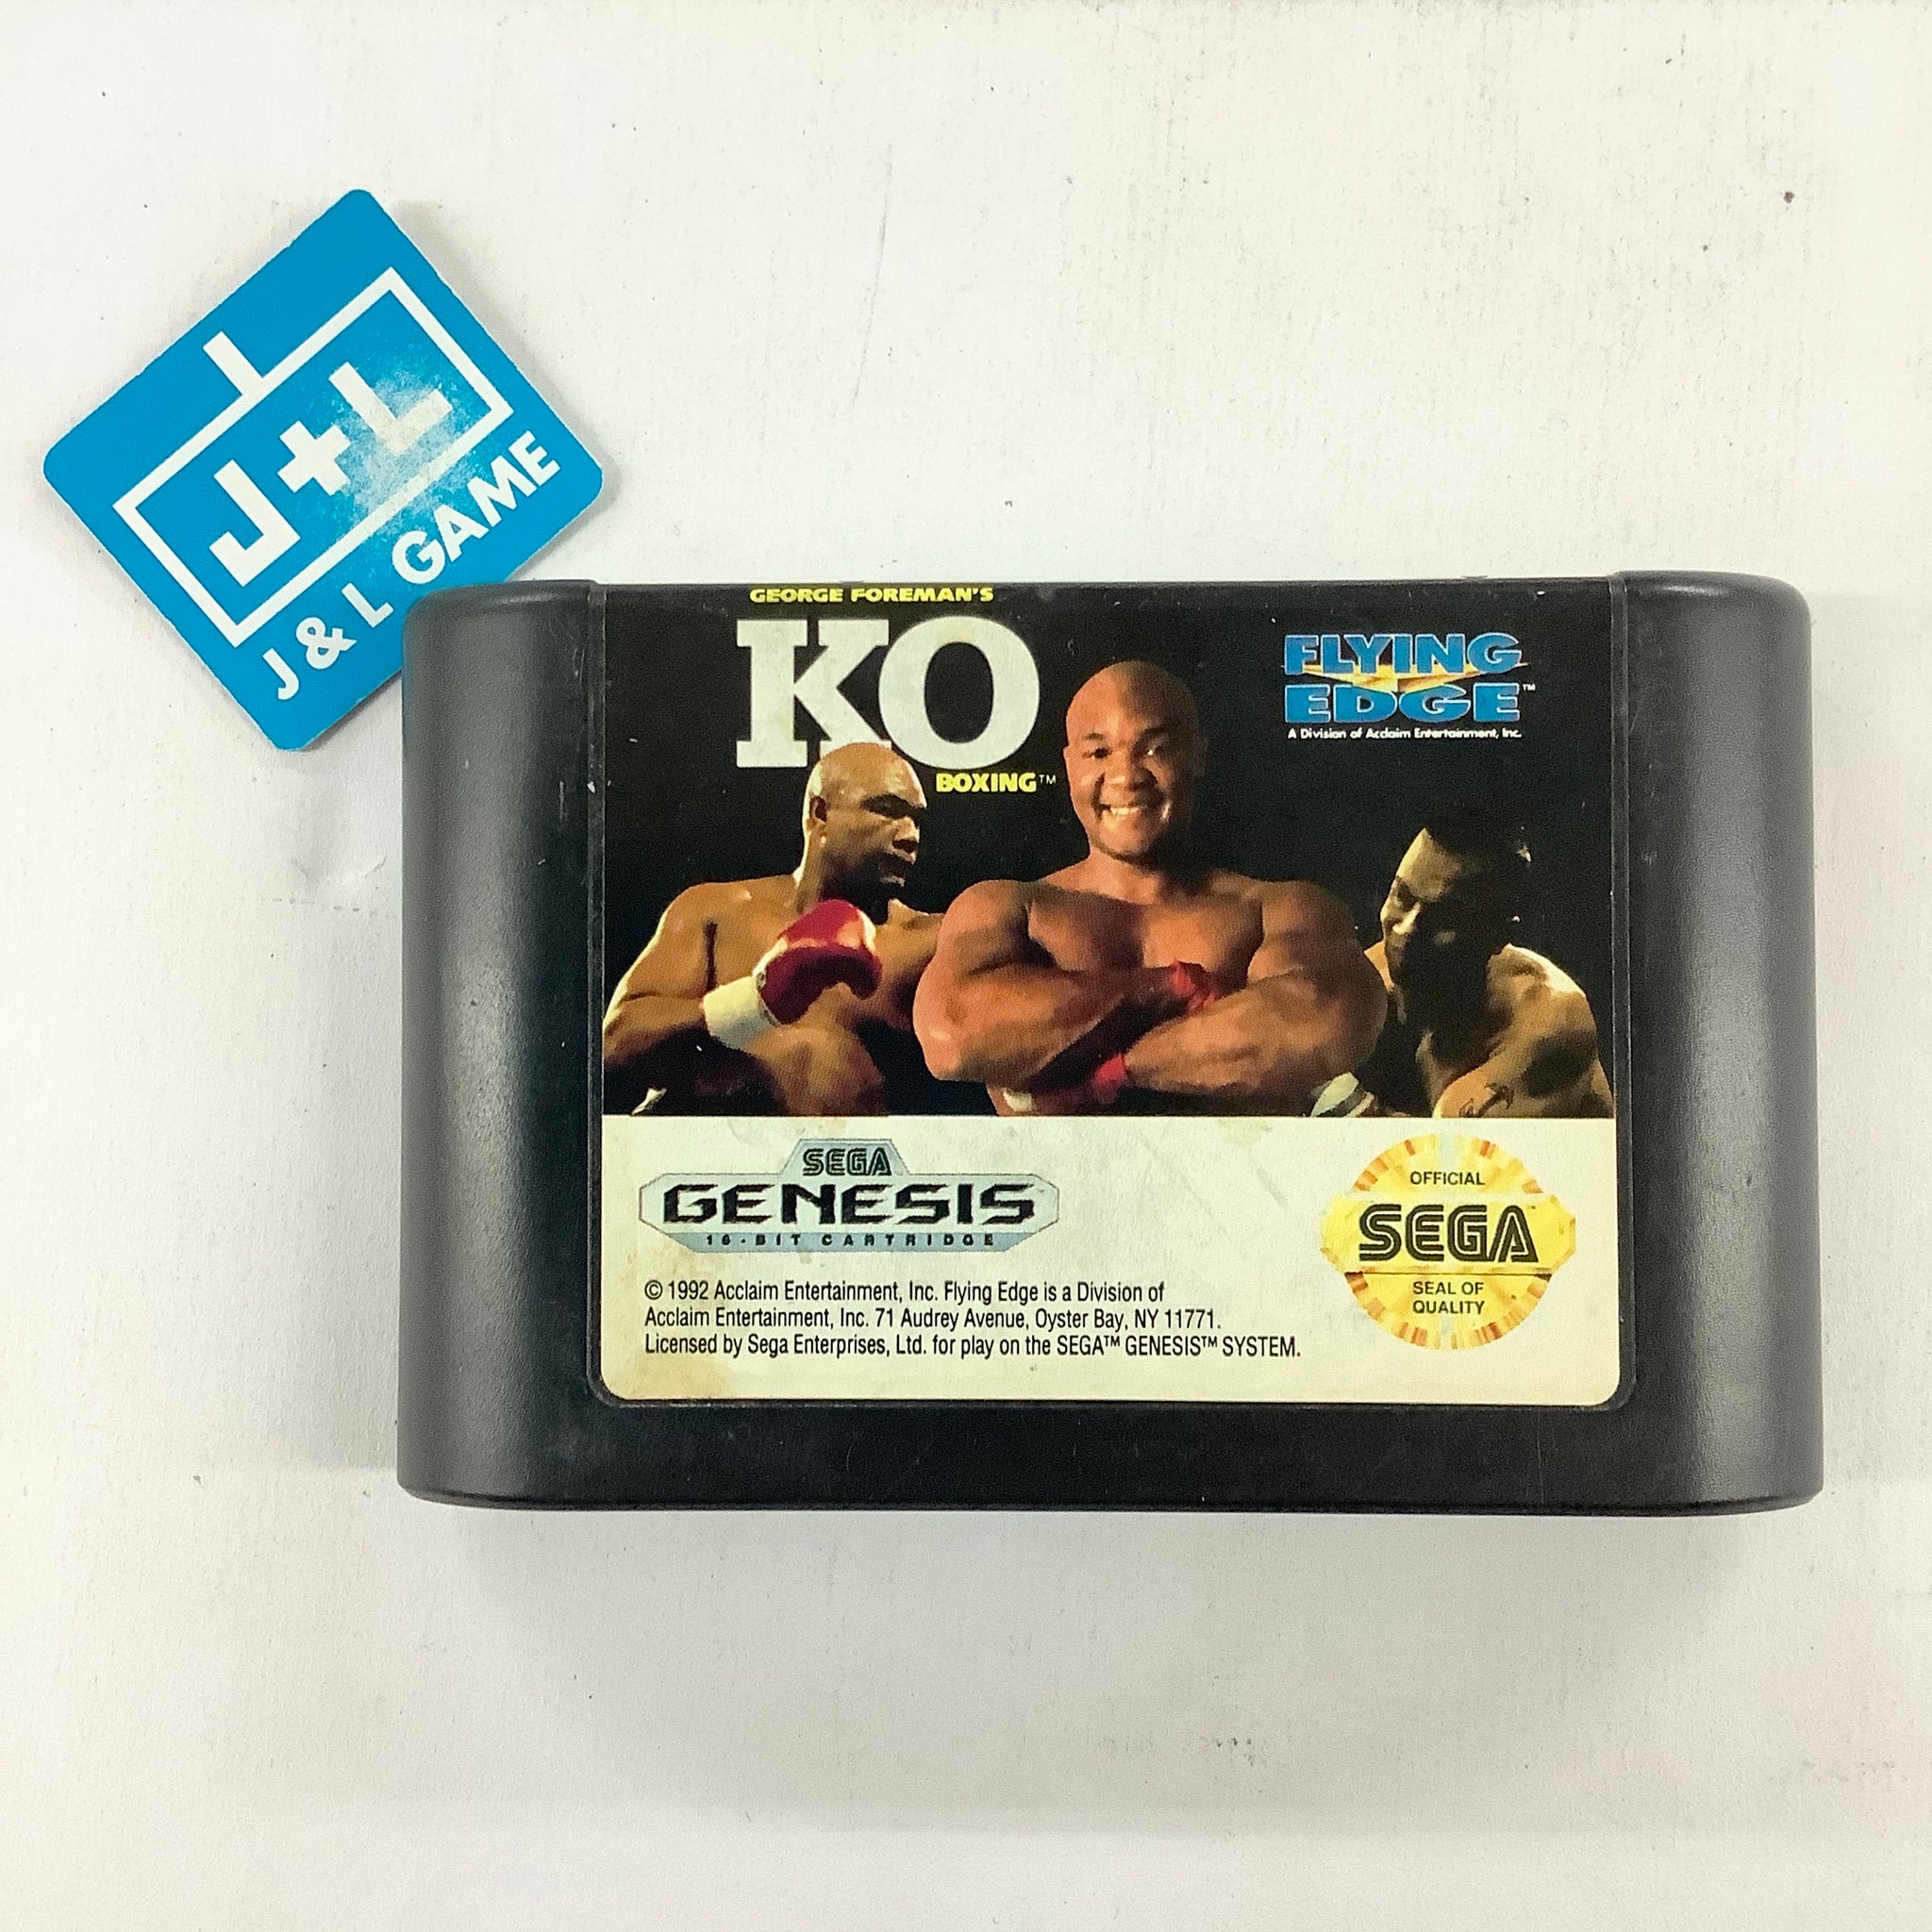 George Foreman's KO Boxing - (SG) SEGA Genesis [Pre-Owned] Video Games Flying Edge   